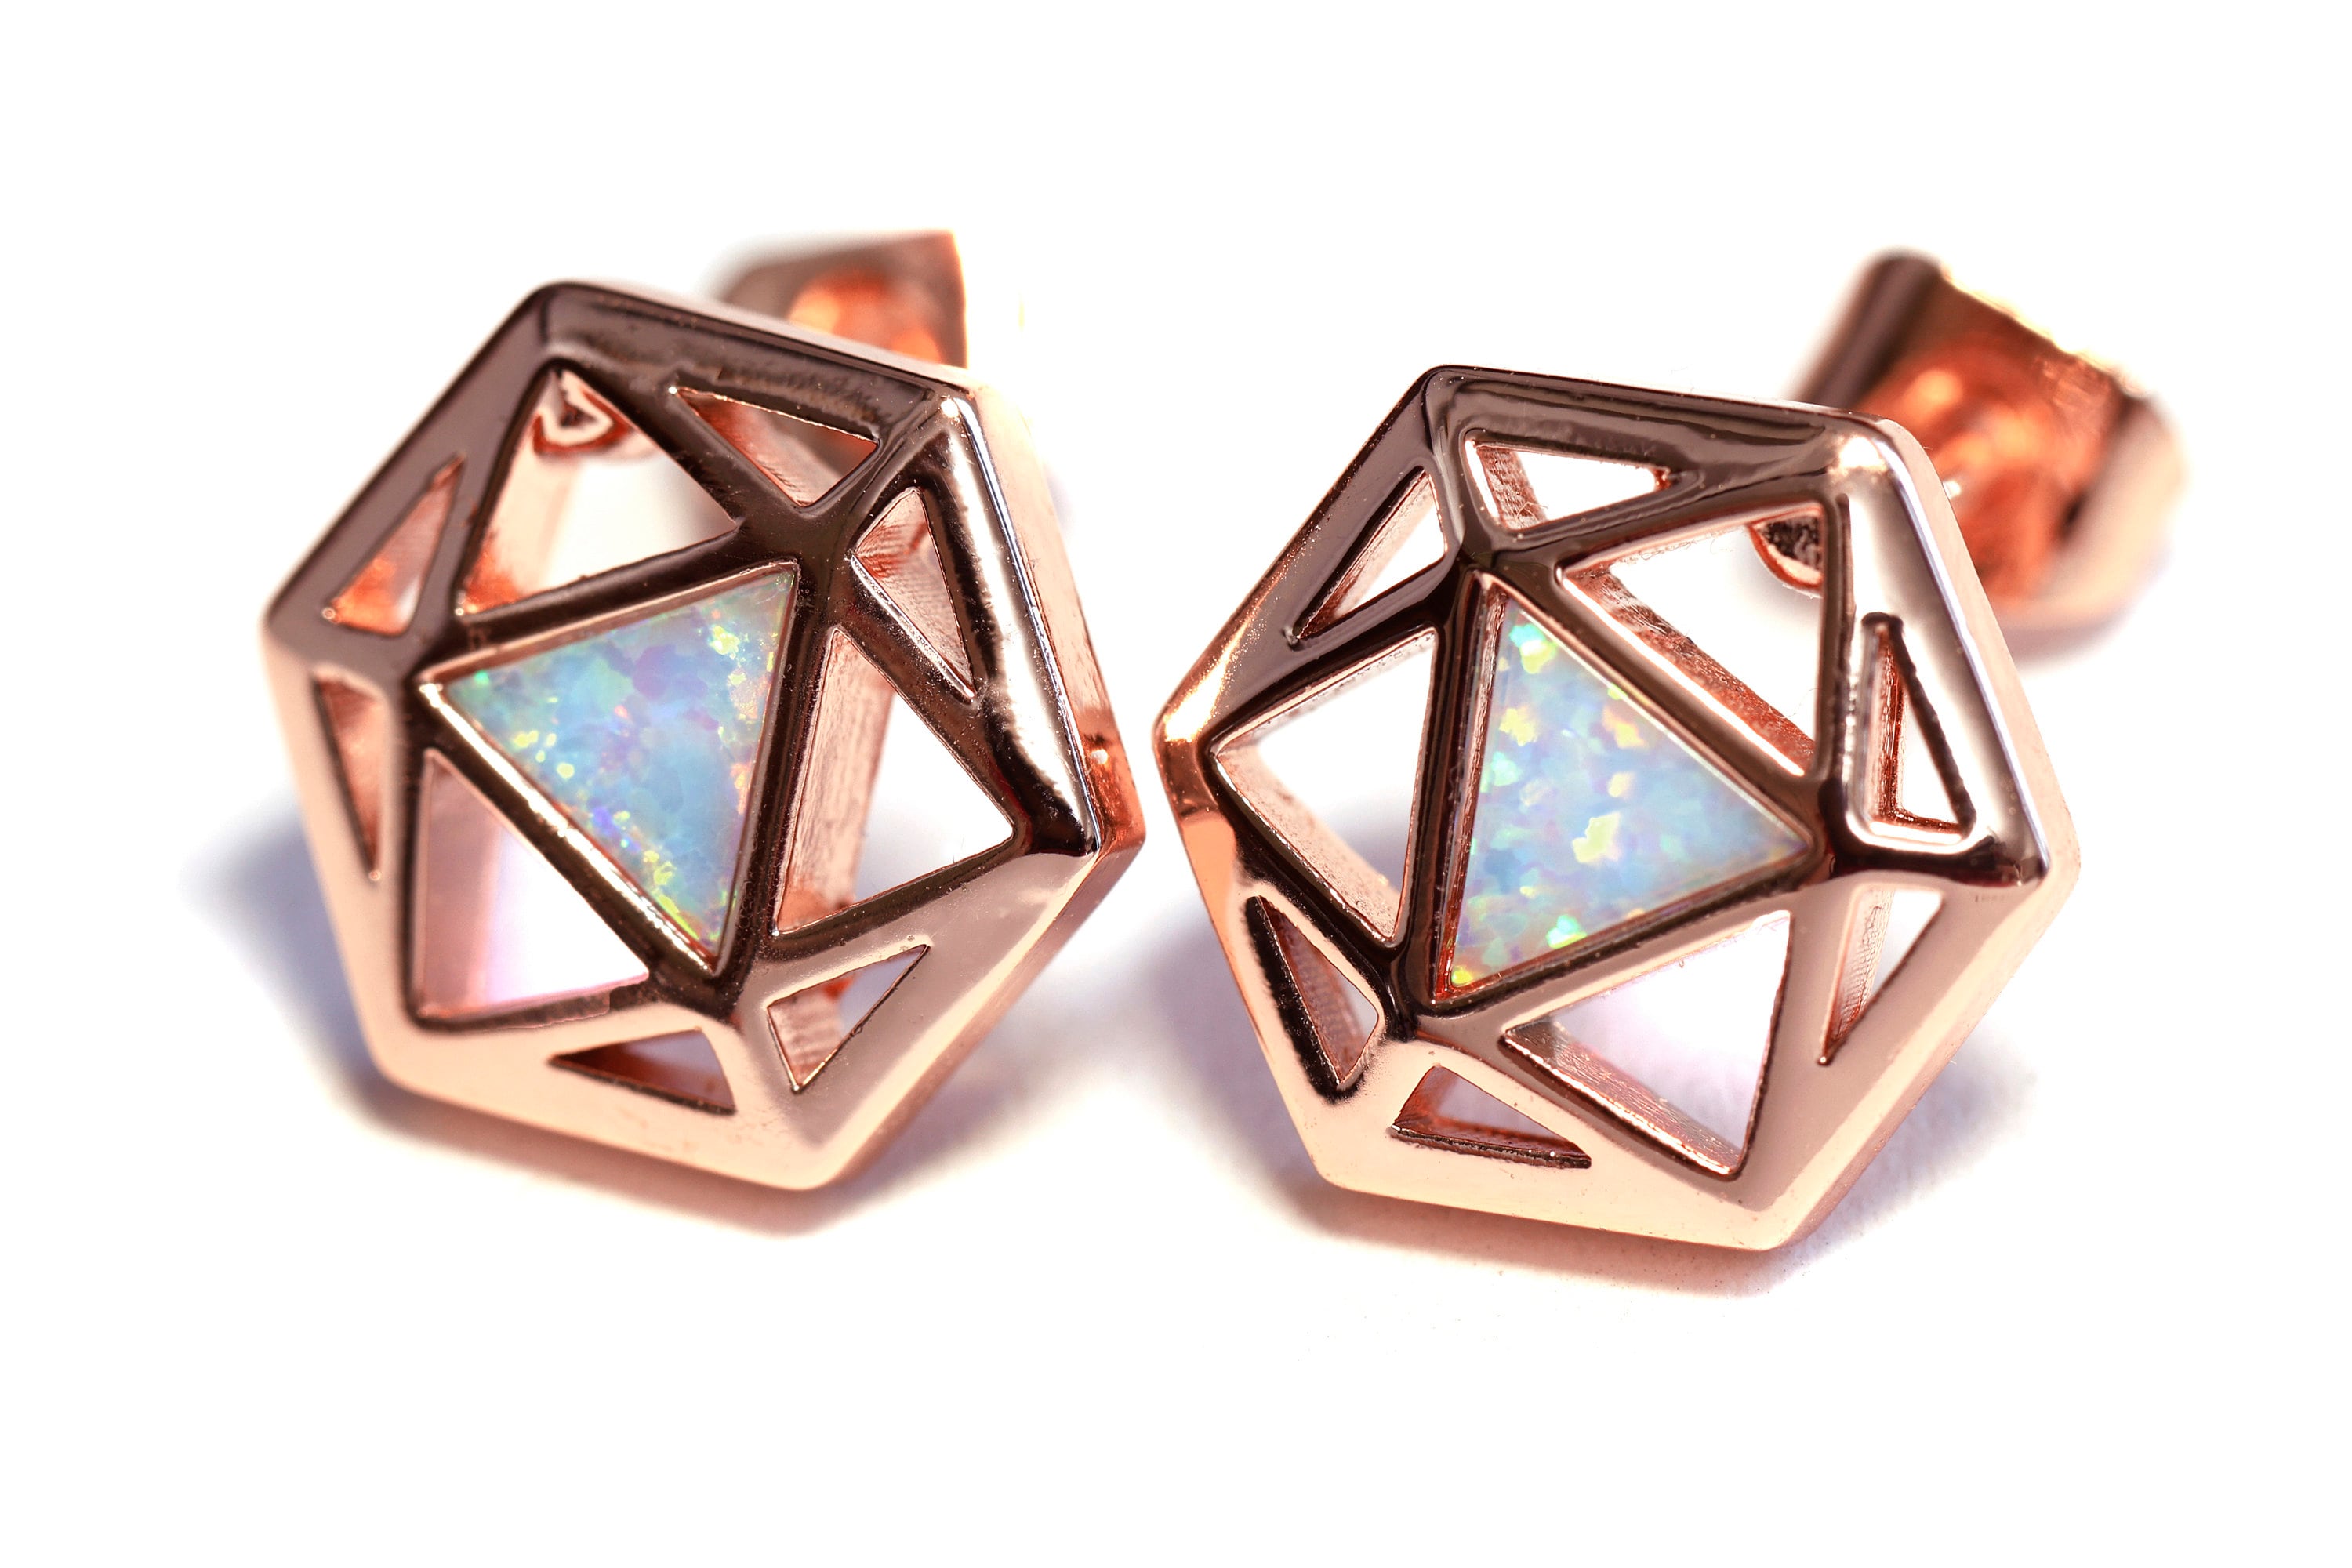 D20 Dice stud earrings, Rose gold dice earrings with light blue opal